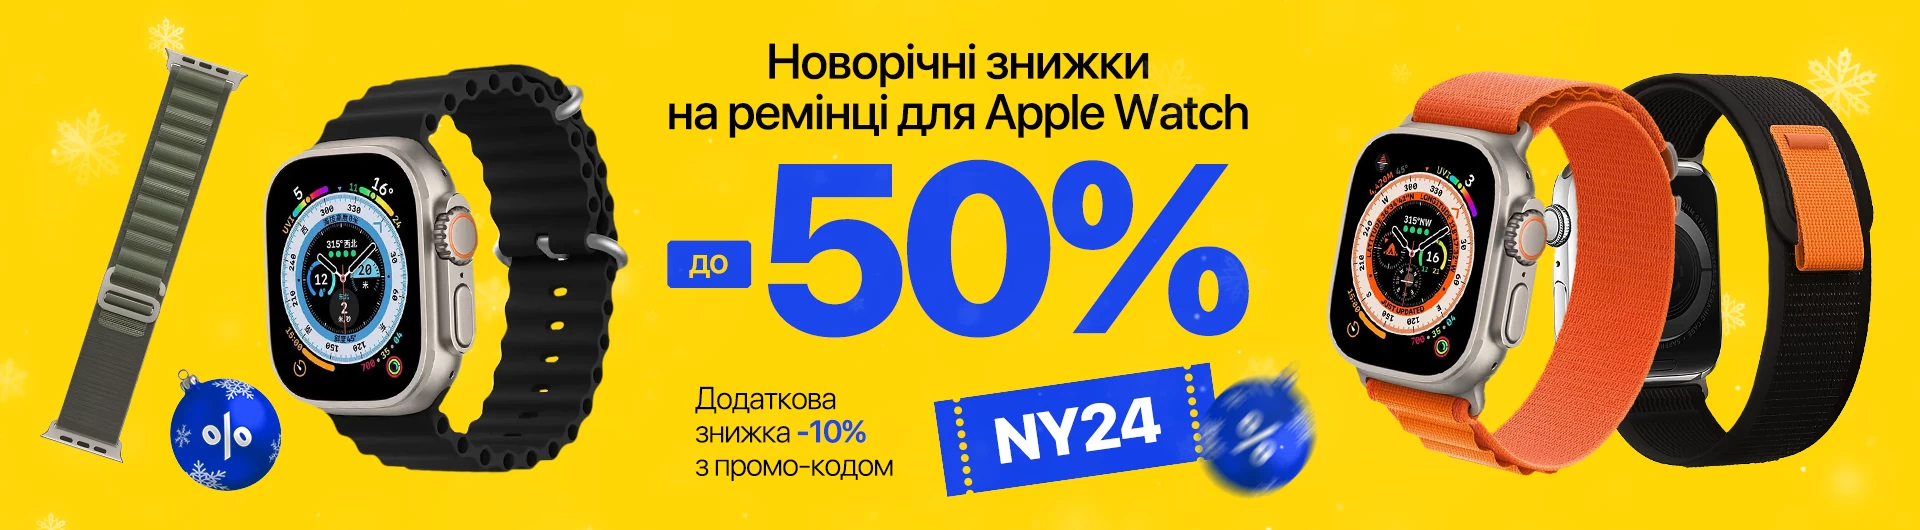 Ремешки для Apple Watch - покупай подарок у Ивана Чехла